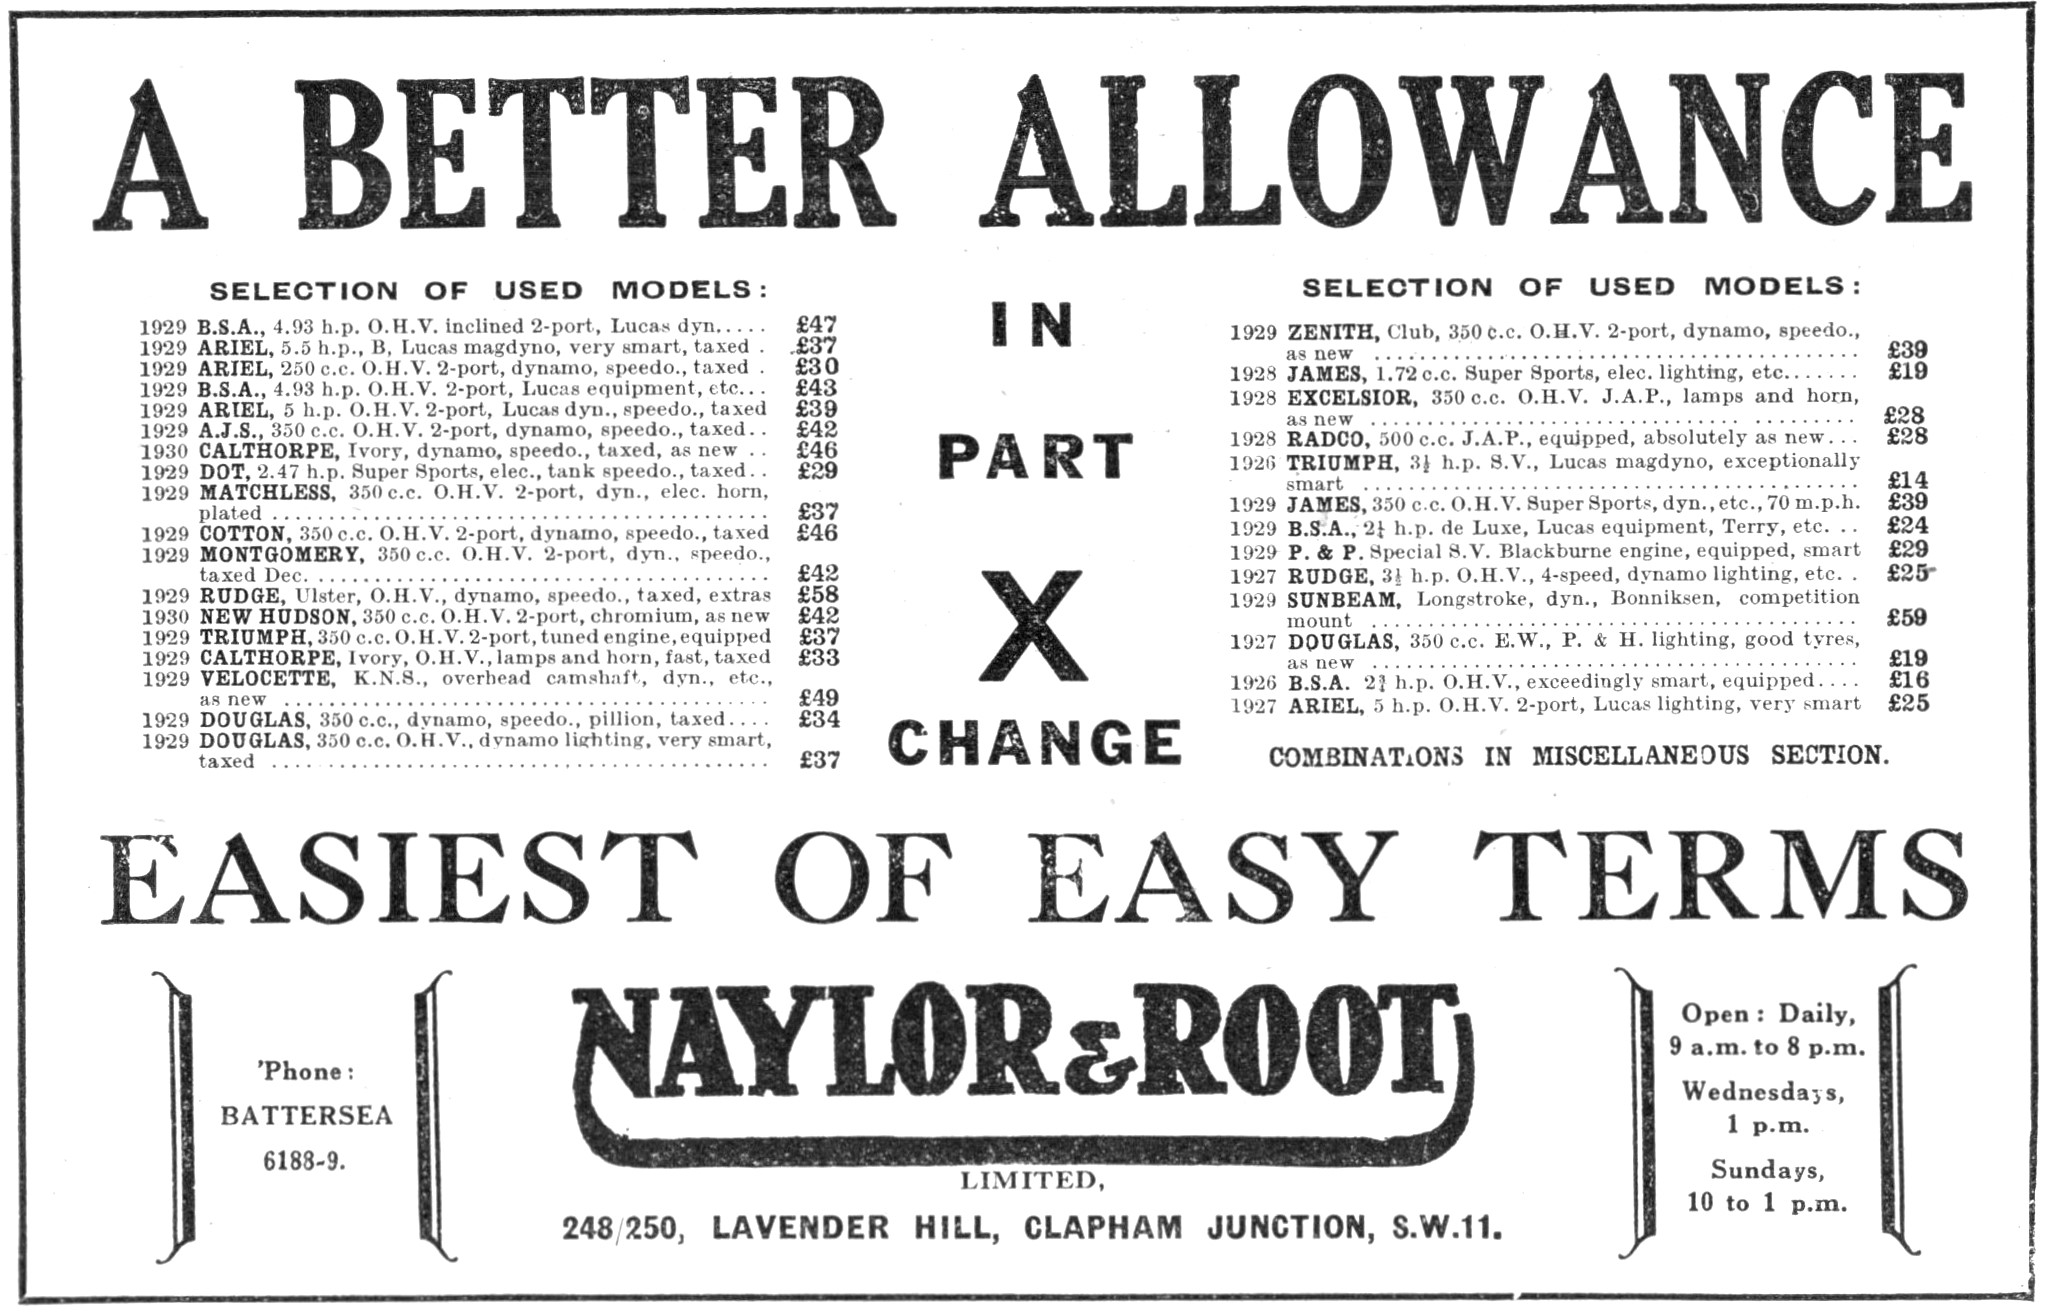 Naylor & Root Motor Cycle Sales & Service 1930 Advert            